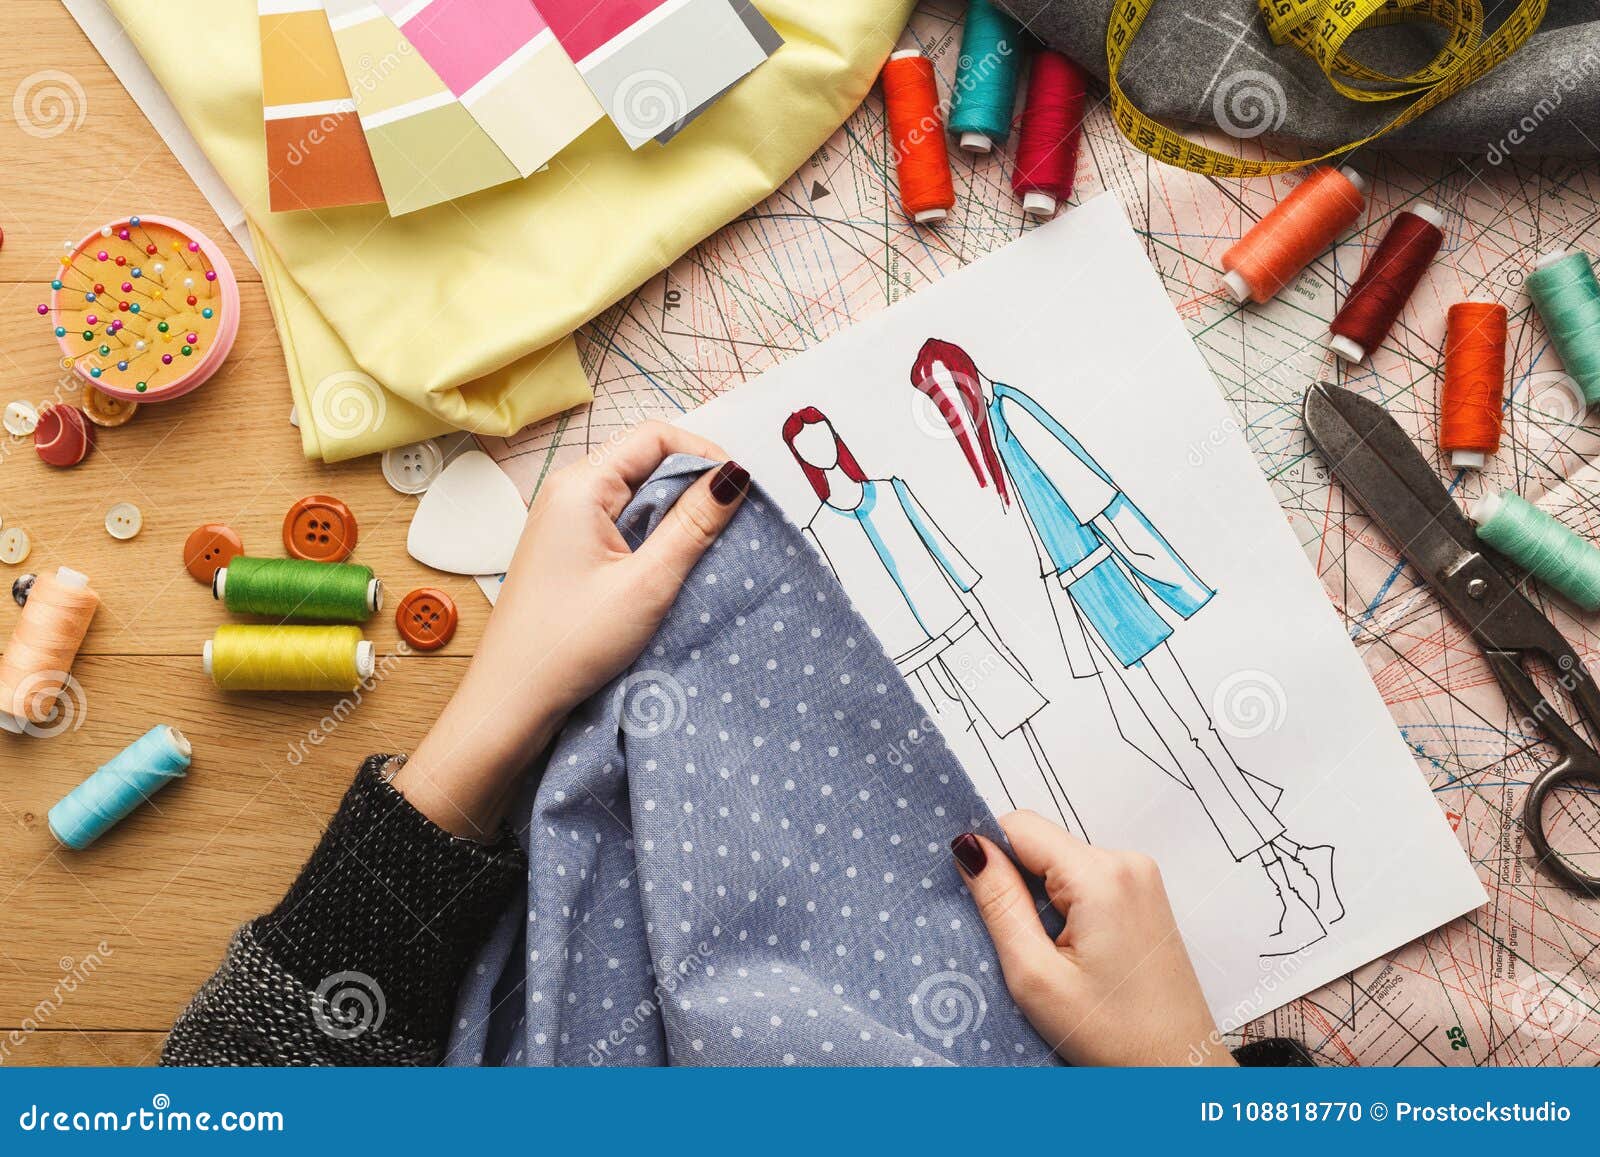 Hand drawn fashion illustration - Background - Fashion designer